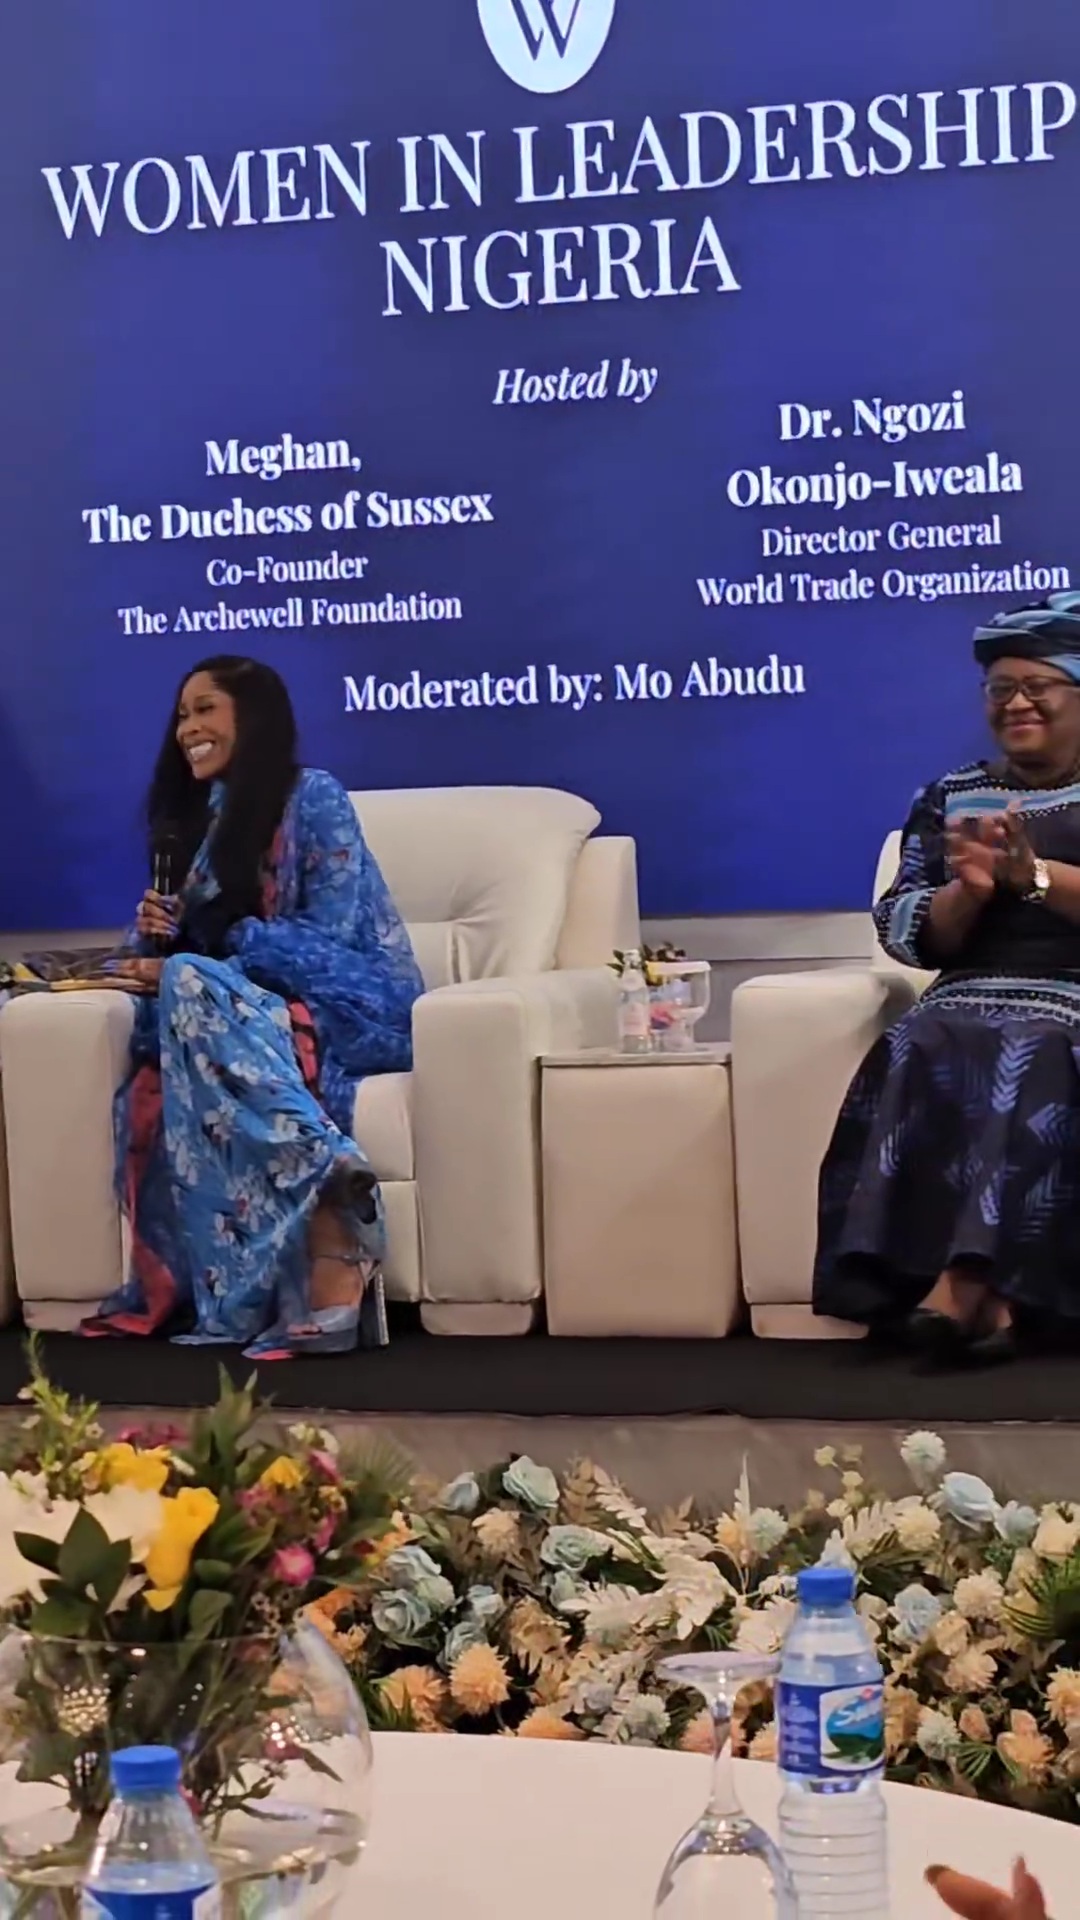 Meghan Markle and Dr Ngozi Okonjo-Iweala host Women in Leadership summit in Nigeria (photos/video